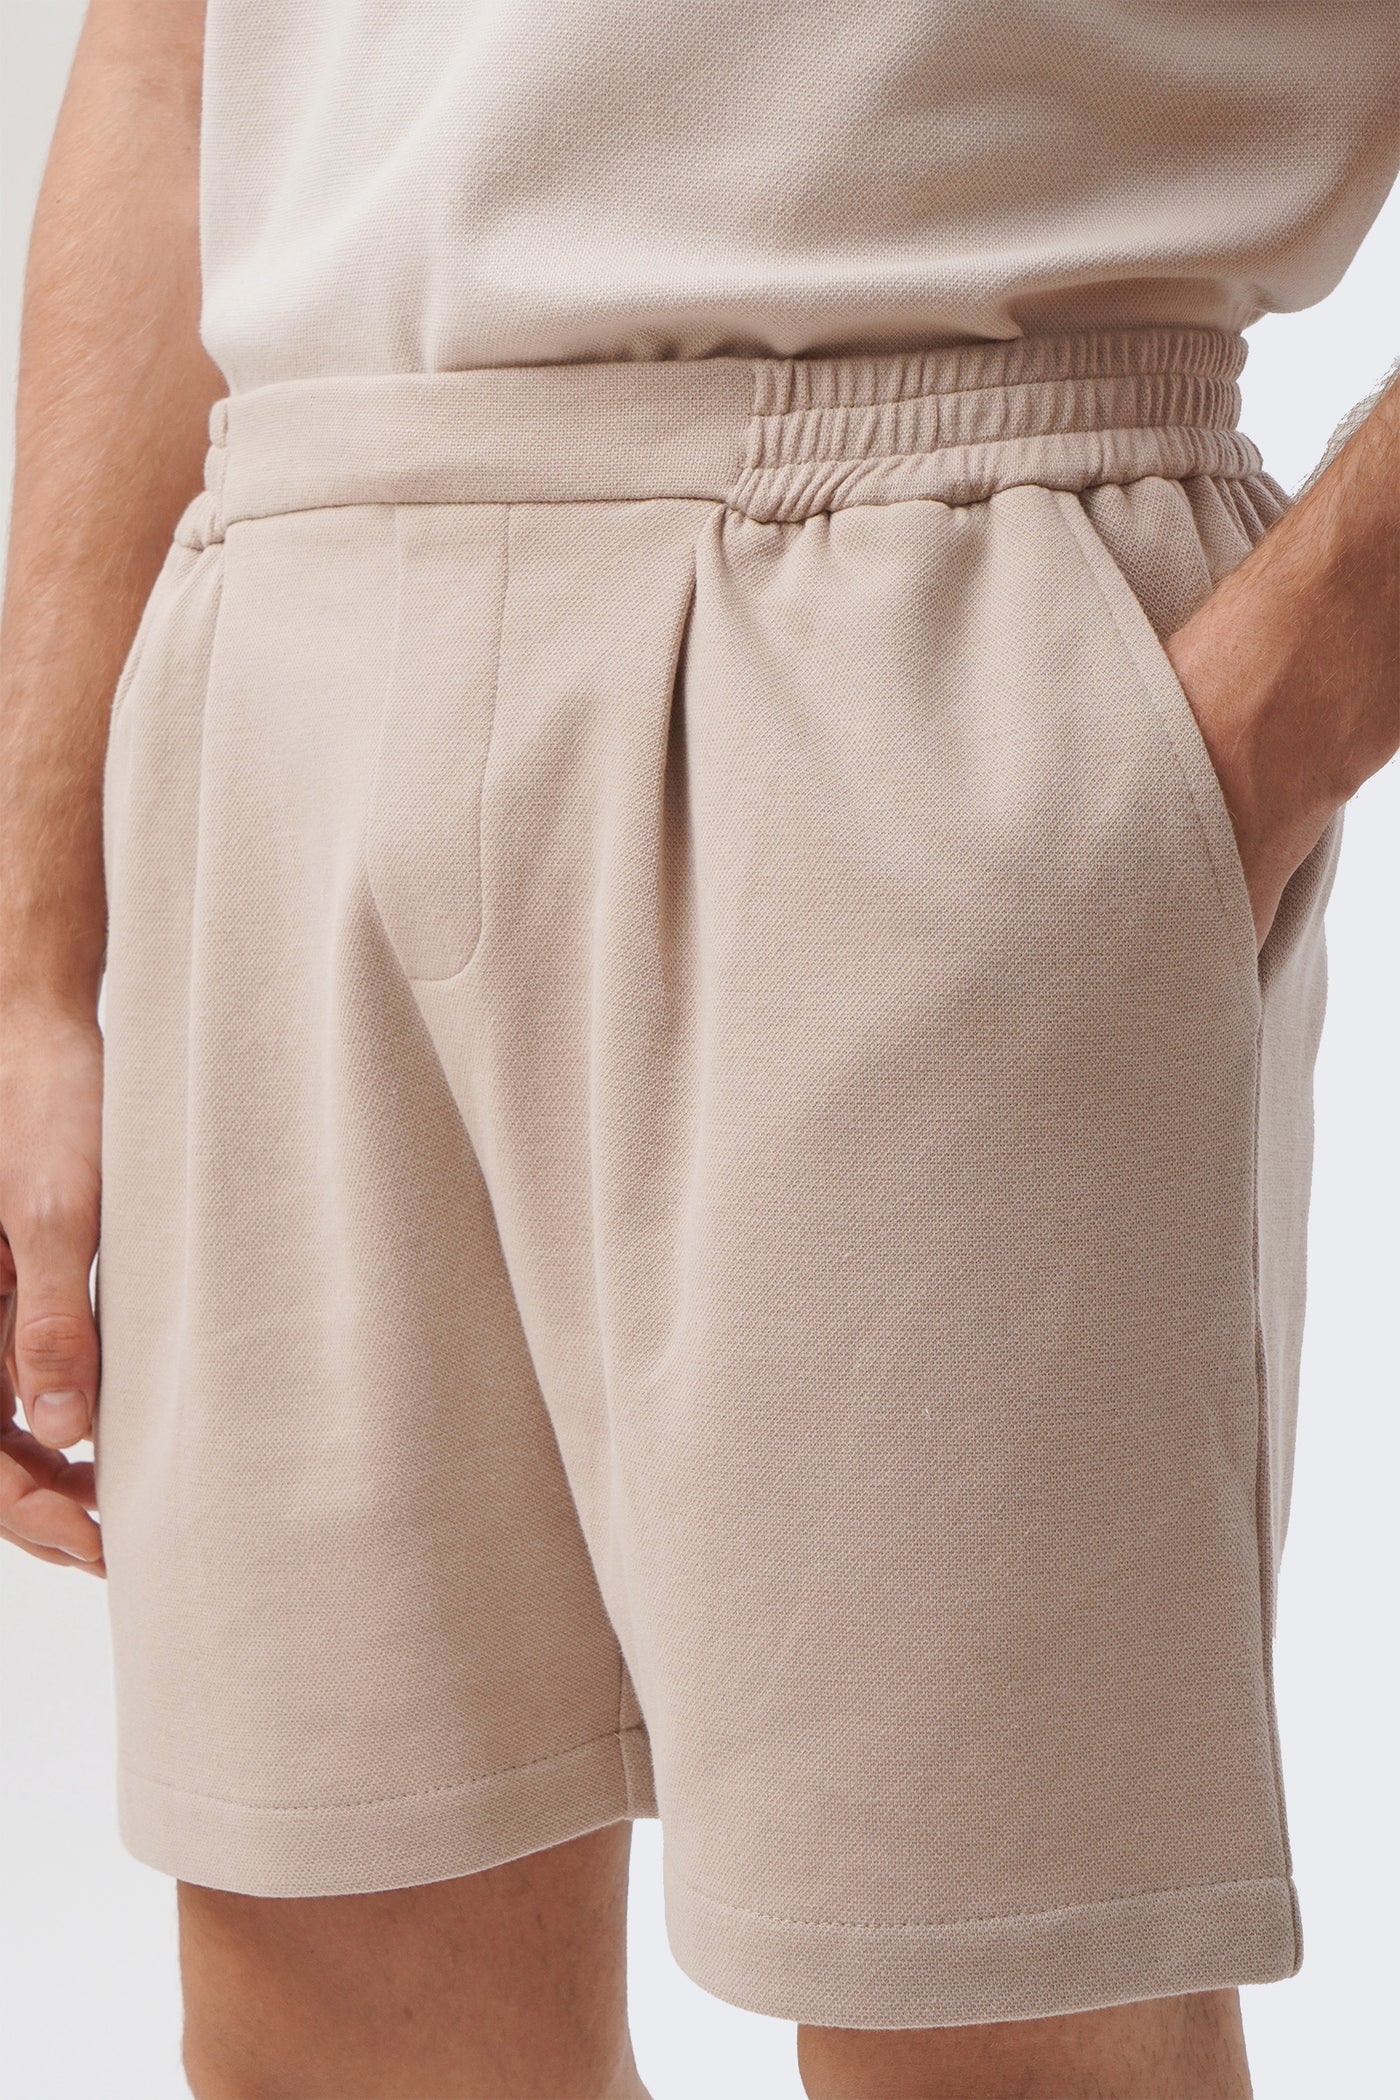 Men's Heavy Knit Pull On Shorts